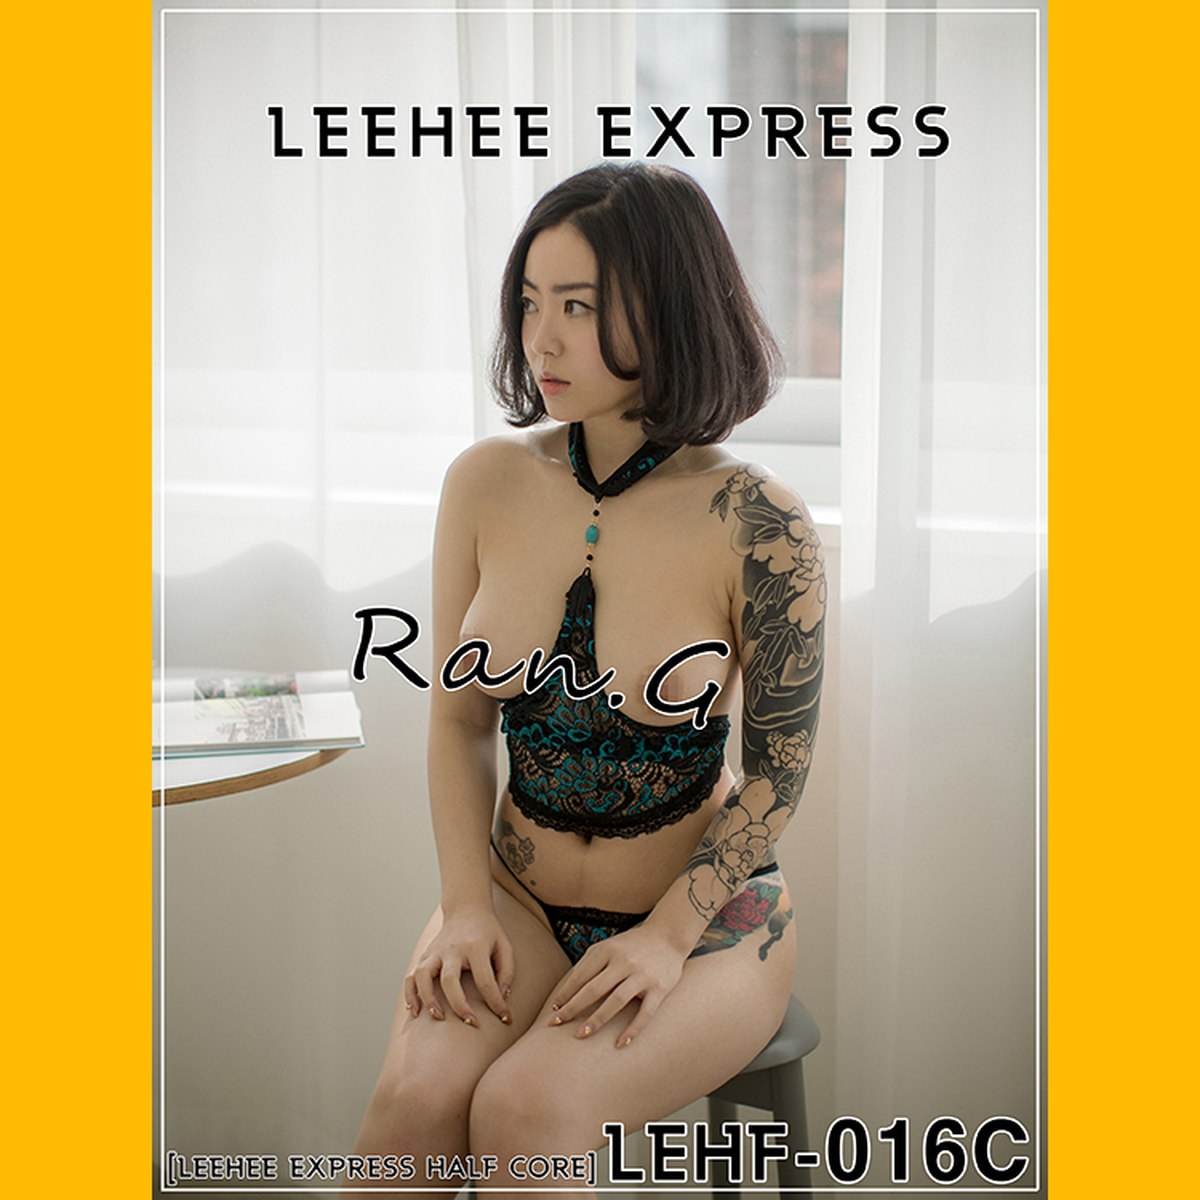 LEEHEE EXPRESS LEHF 016C Ran G 0045 5474565768.jpg